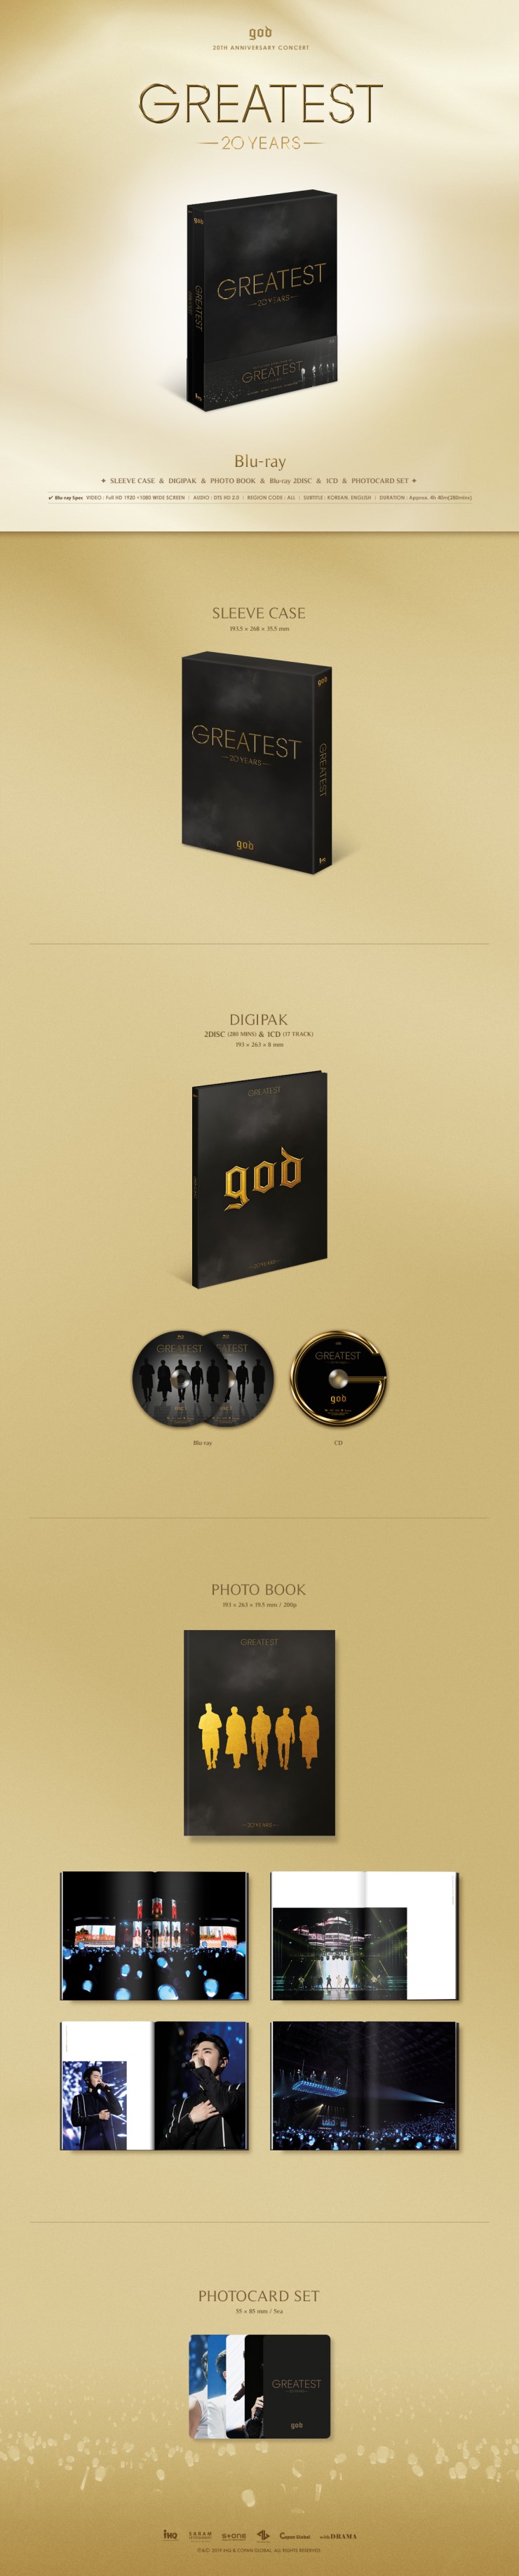 GOD(지오디) - 20th Concert GREATEST Blu-ray